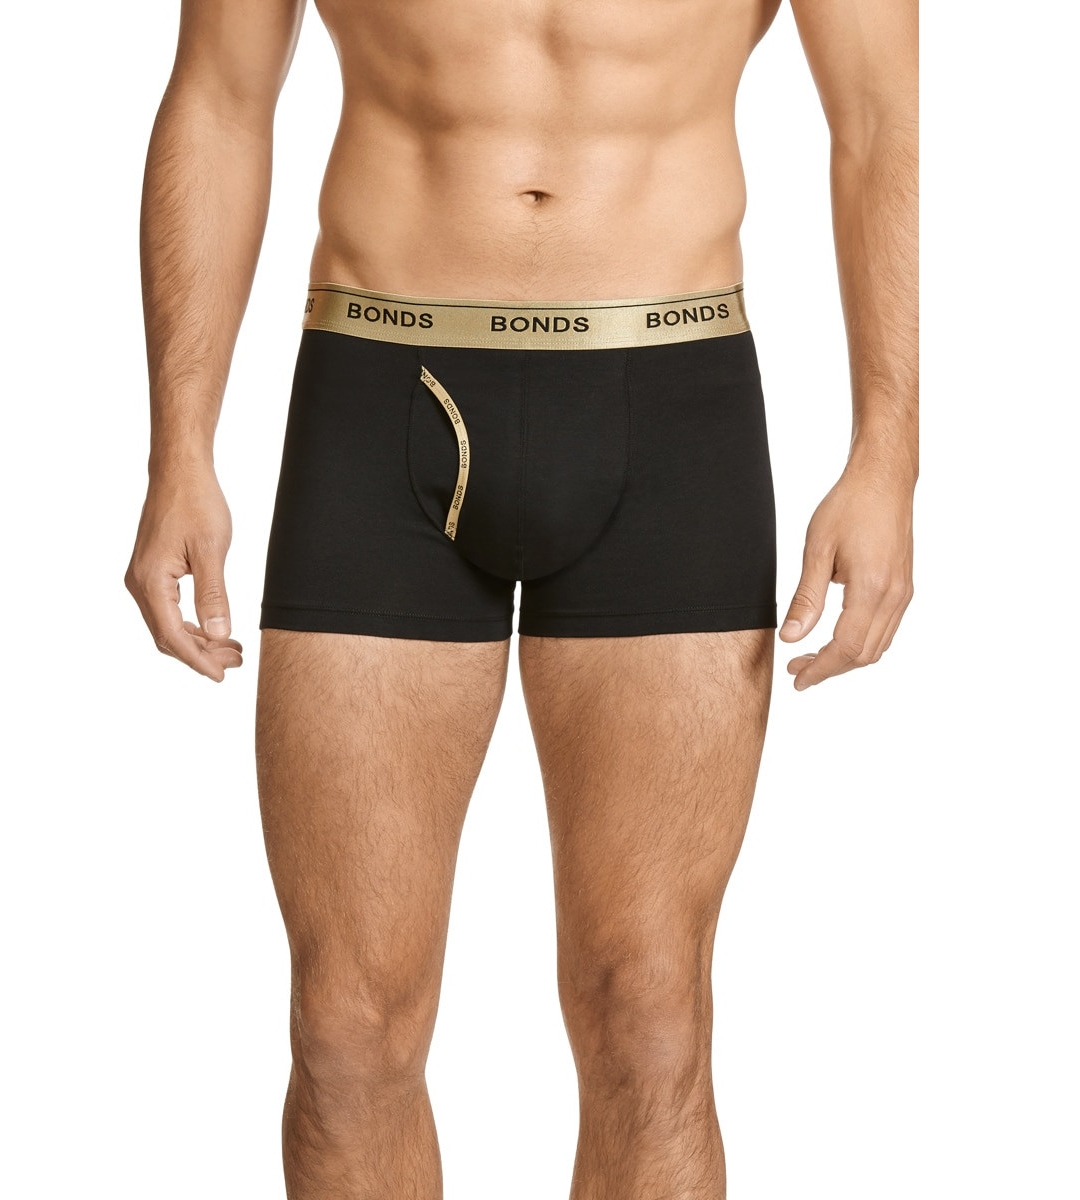 Bonds white mens guyfront trunks briefs boxer shorts comfy undies